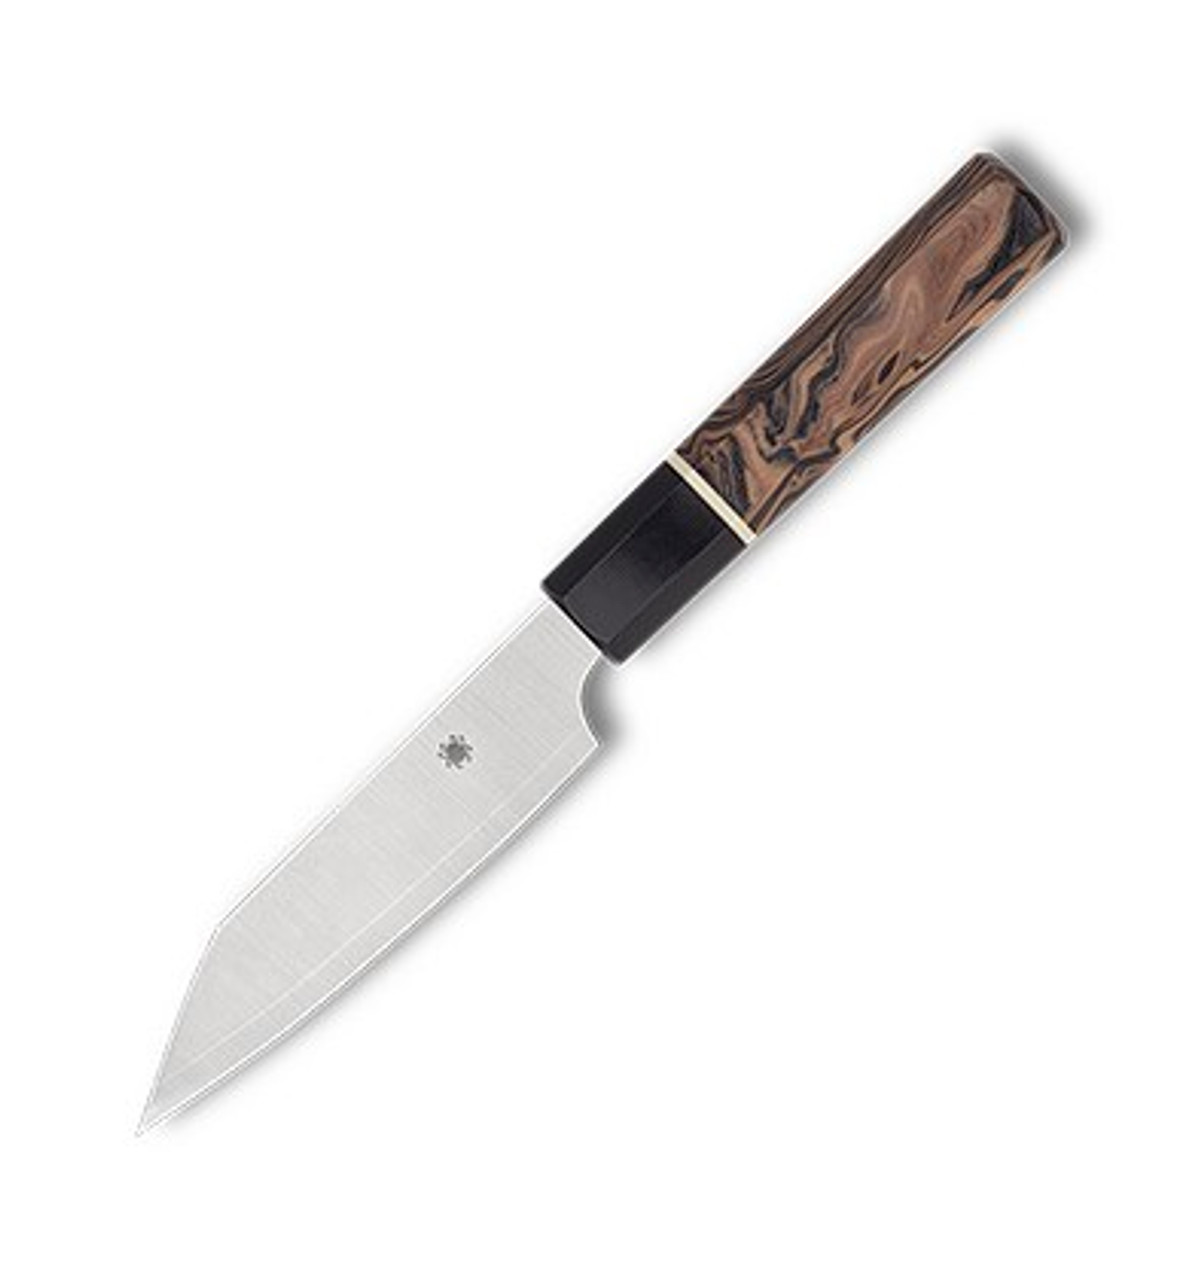 Ruelas Tools - Spyderco mini paring knife sheath. The